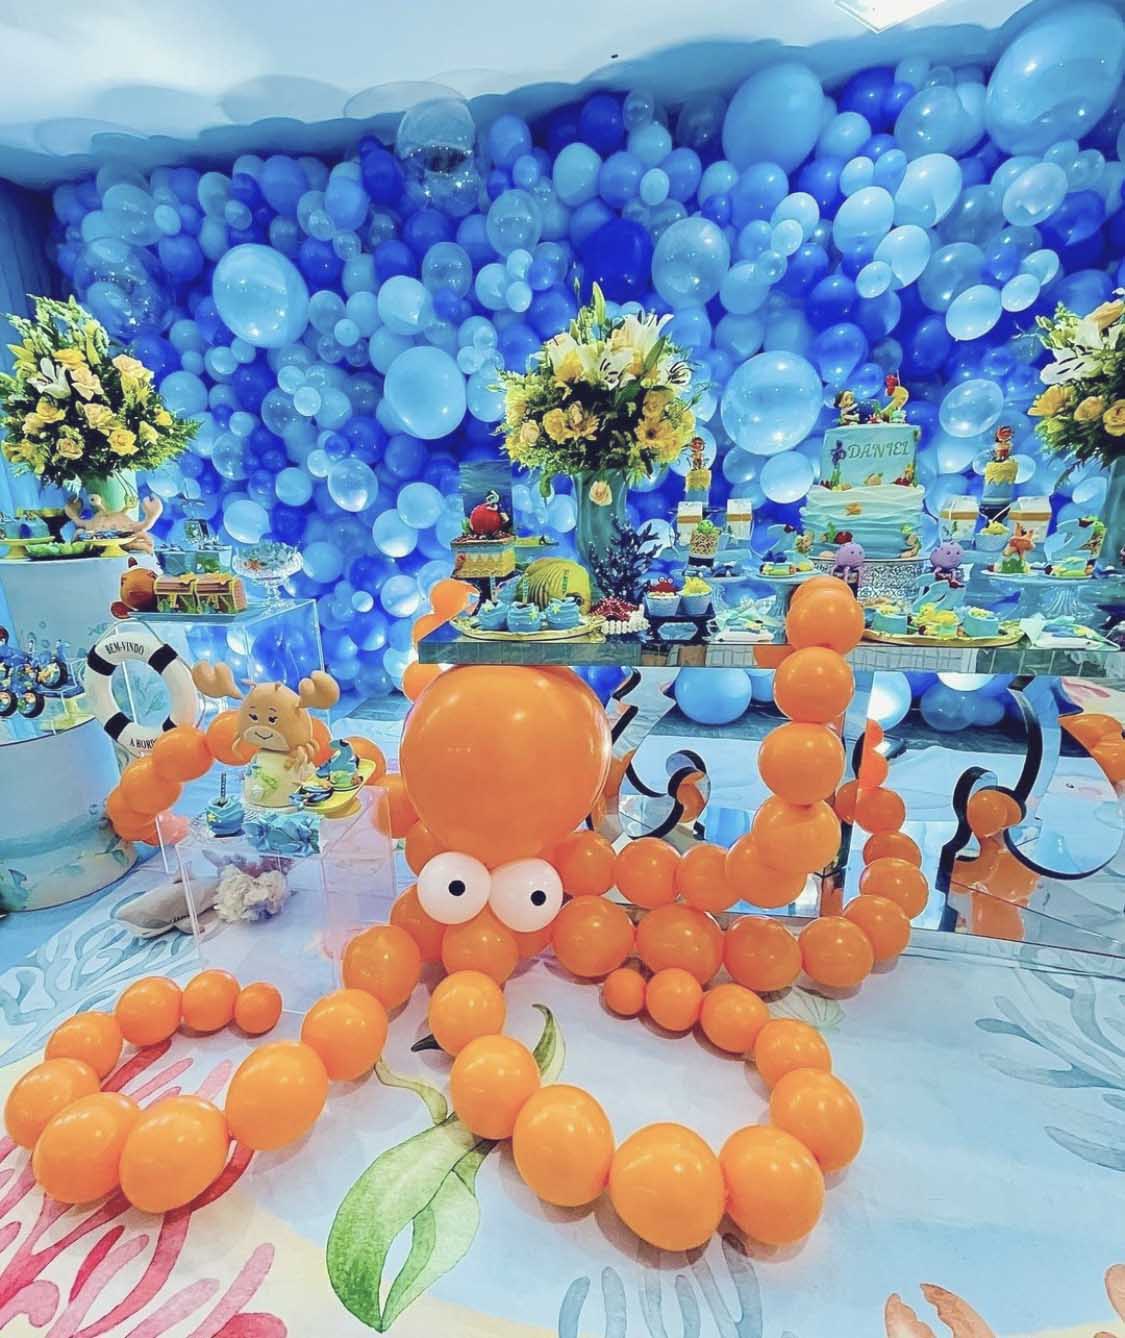 Underwater Birthday Party - Delhi